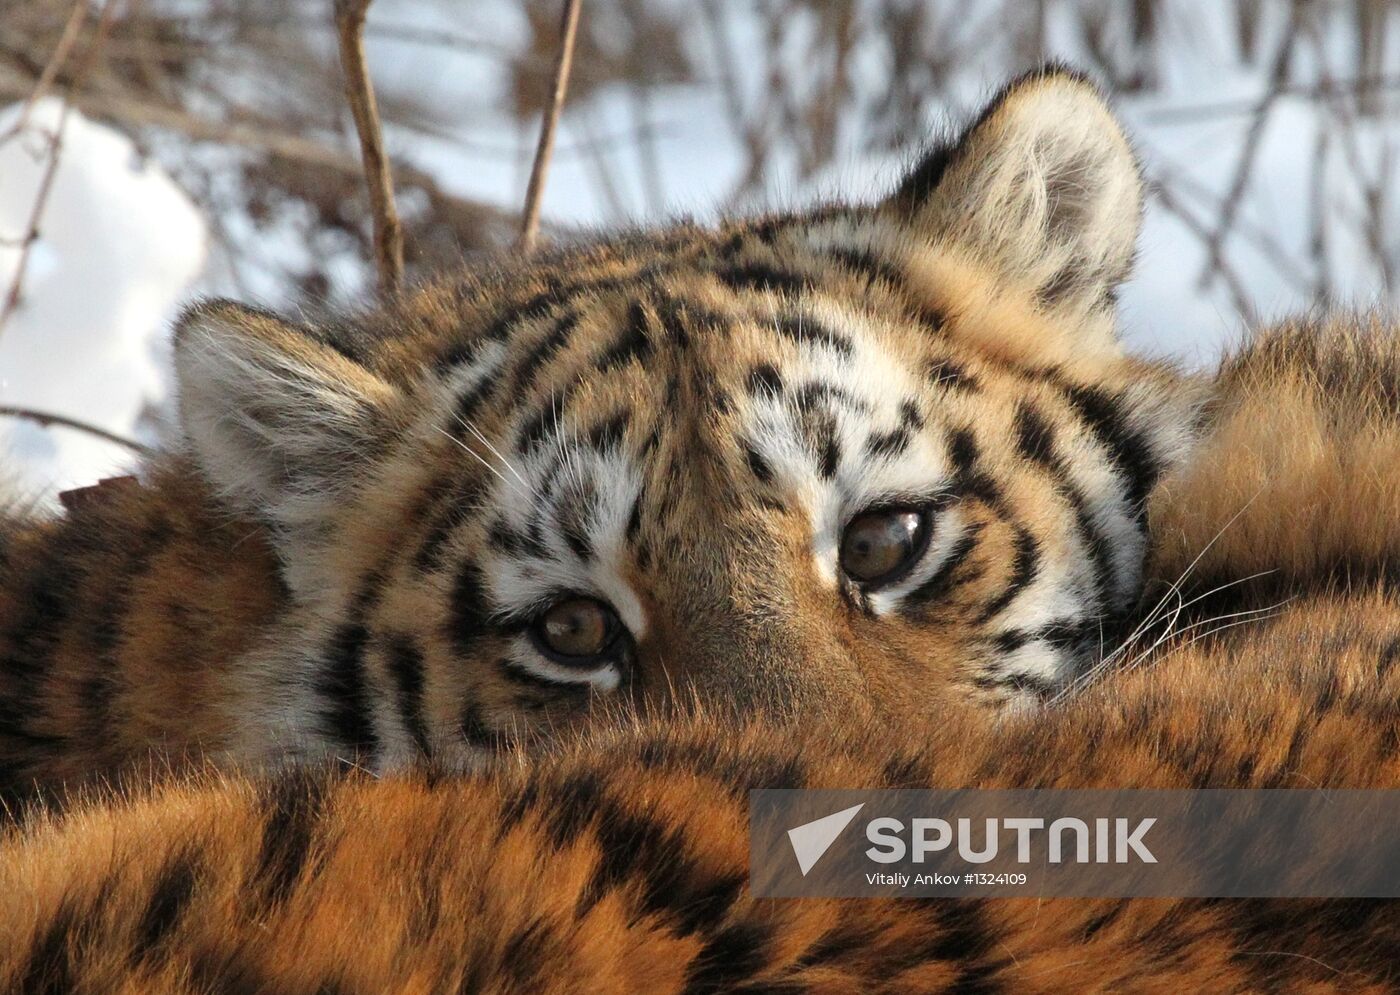 Tiger park opens in Primorye